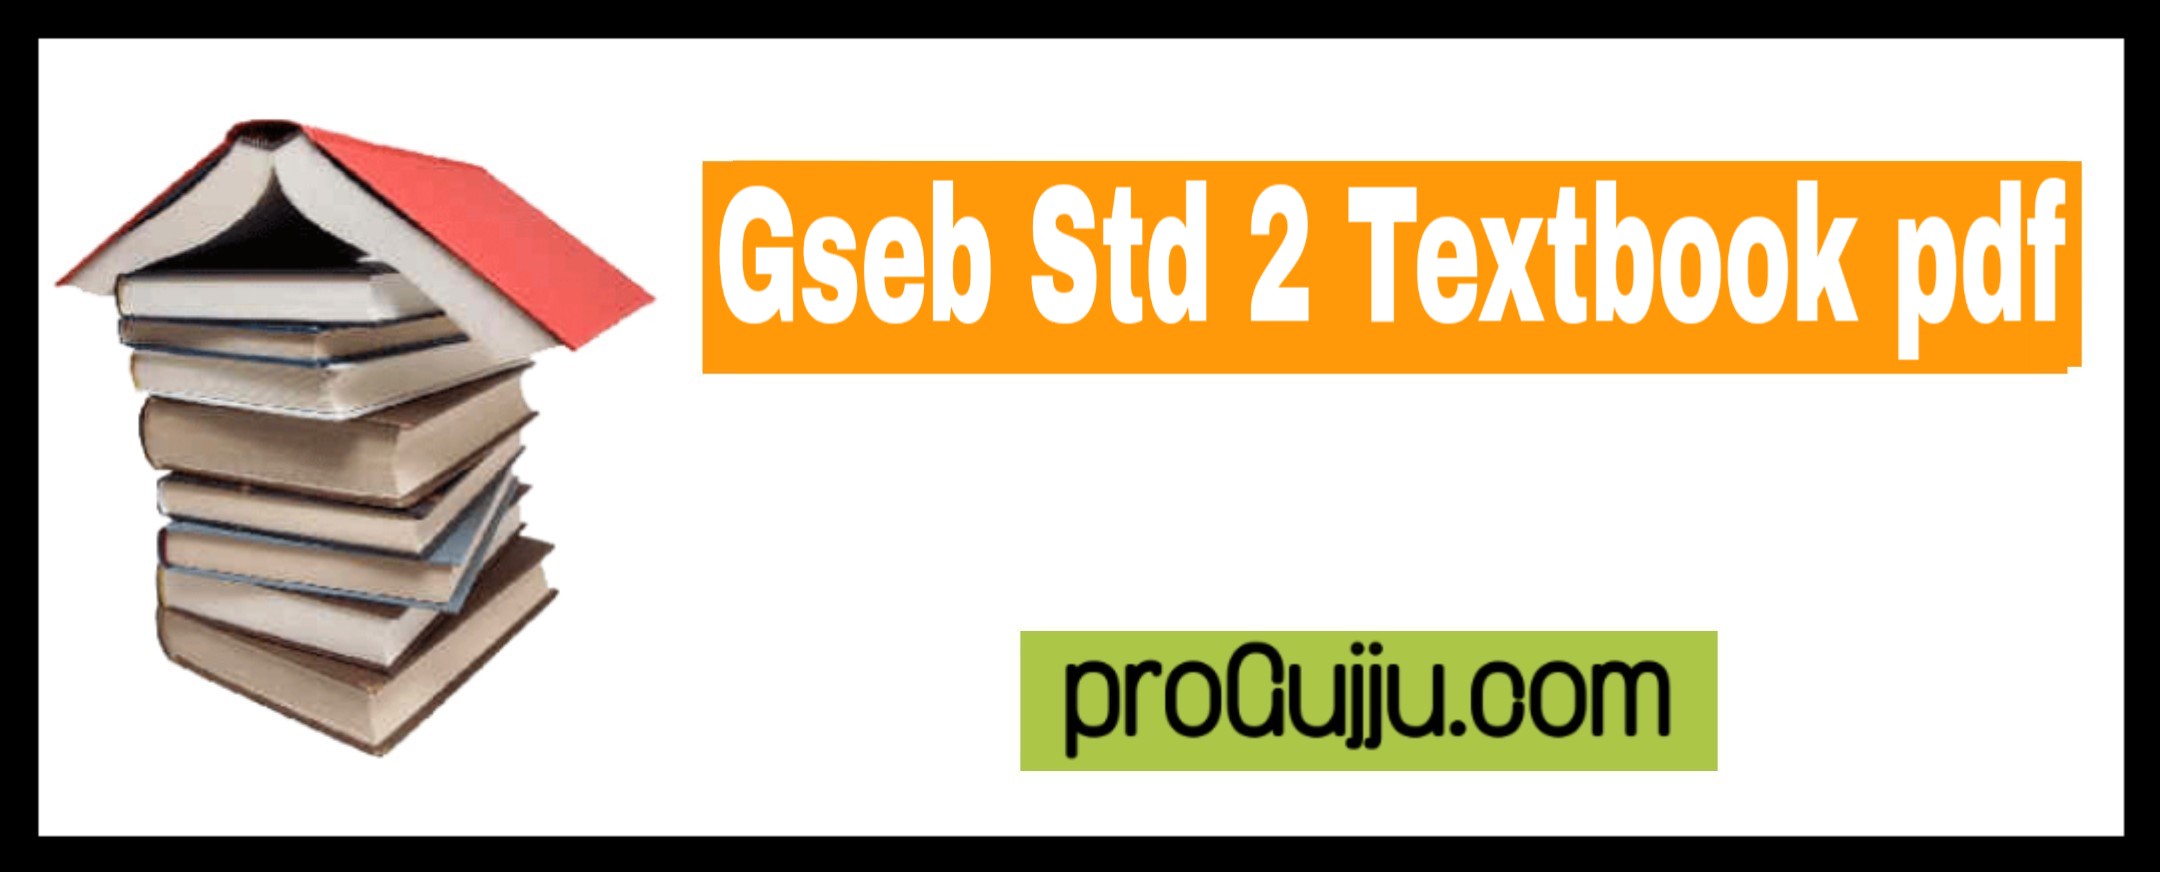 GSEB Std 2 Textbook pdf